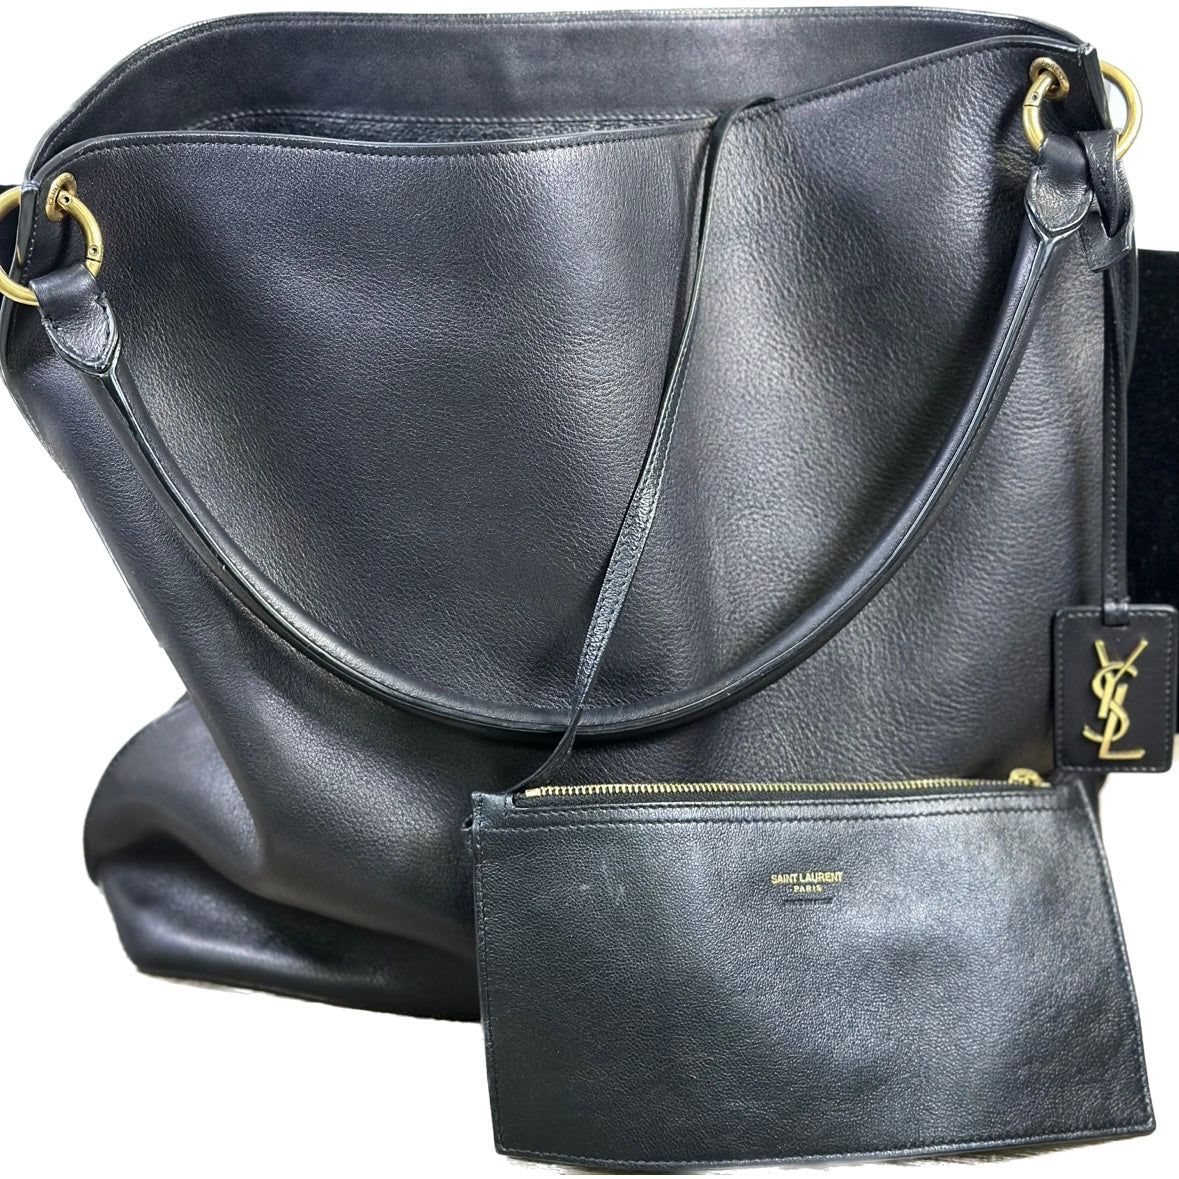 Ysl New Black Tag Hobo Leather Bag